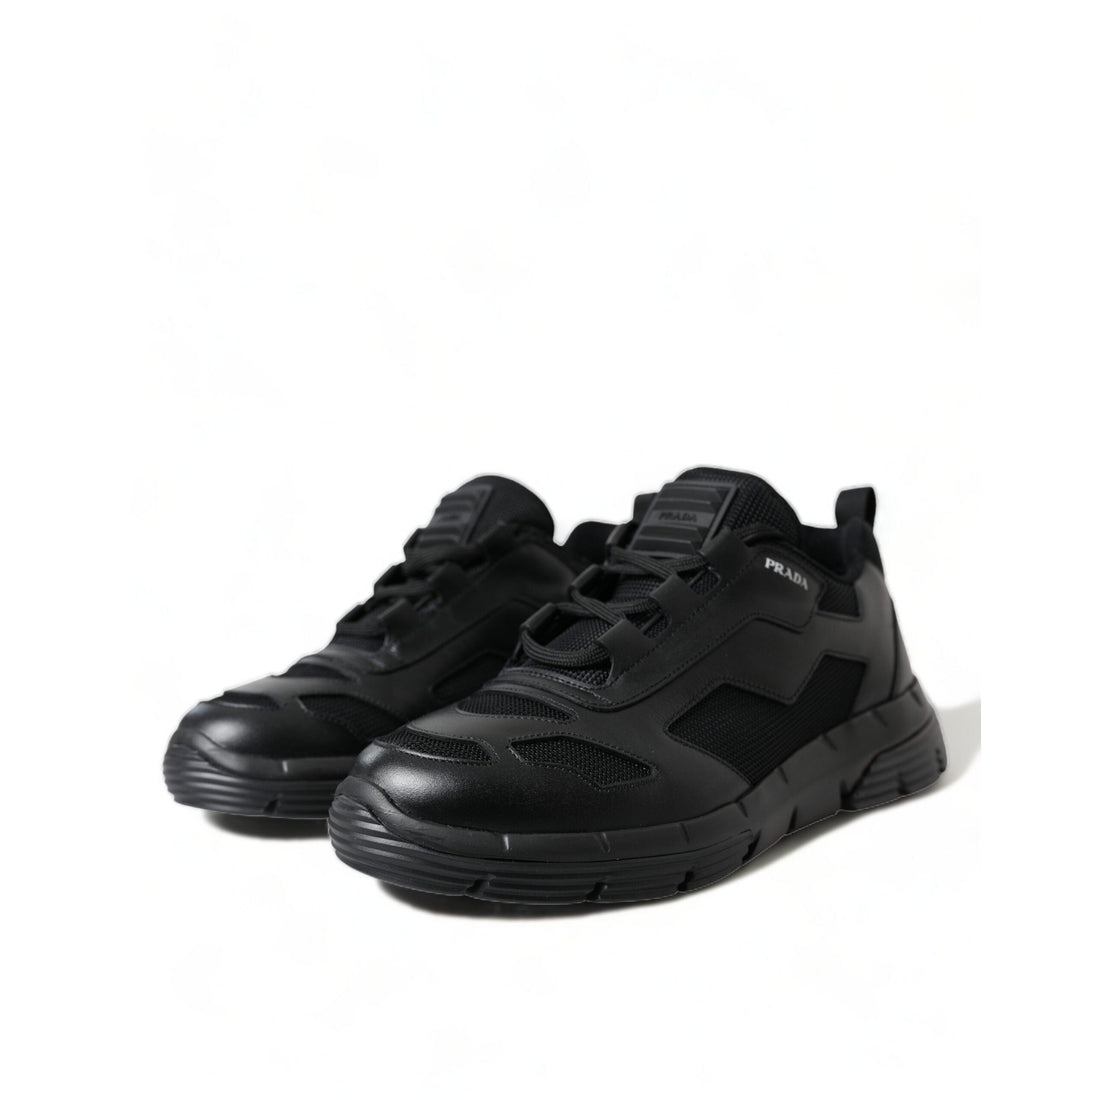 Prada Black Mesh Panel Low Top Twist Trainers Sneakers Shoes